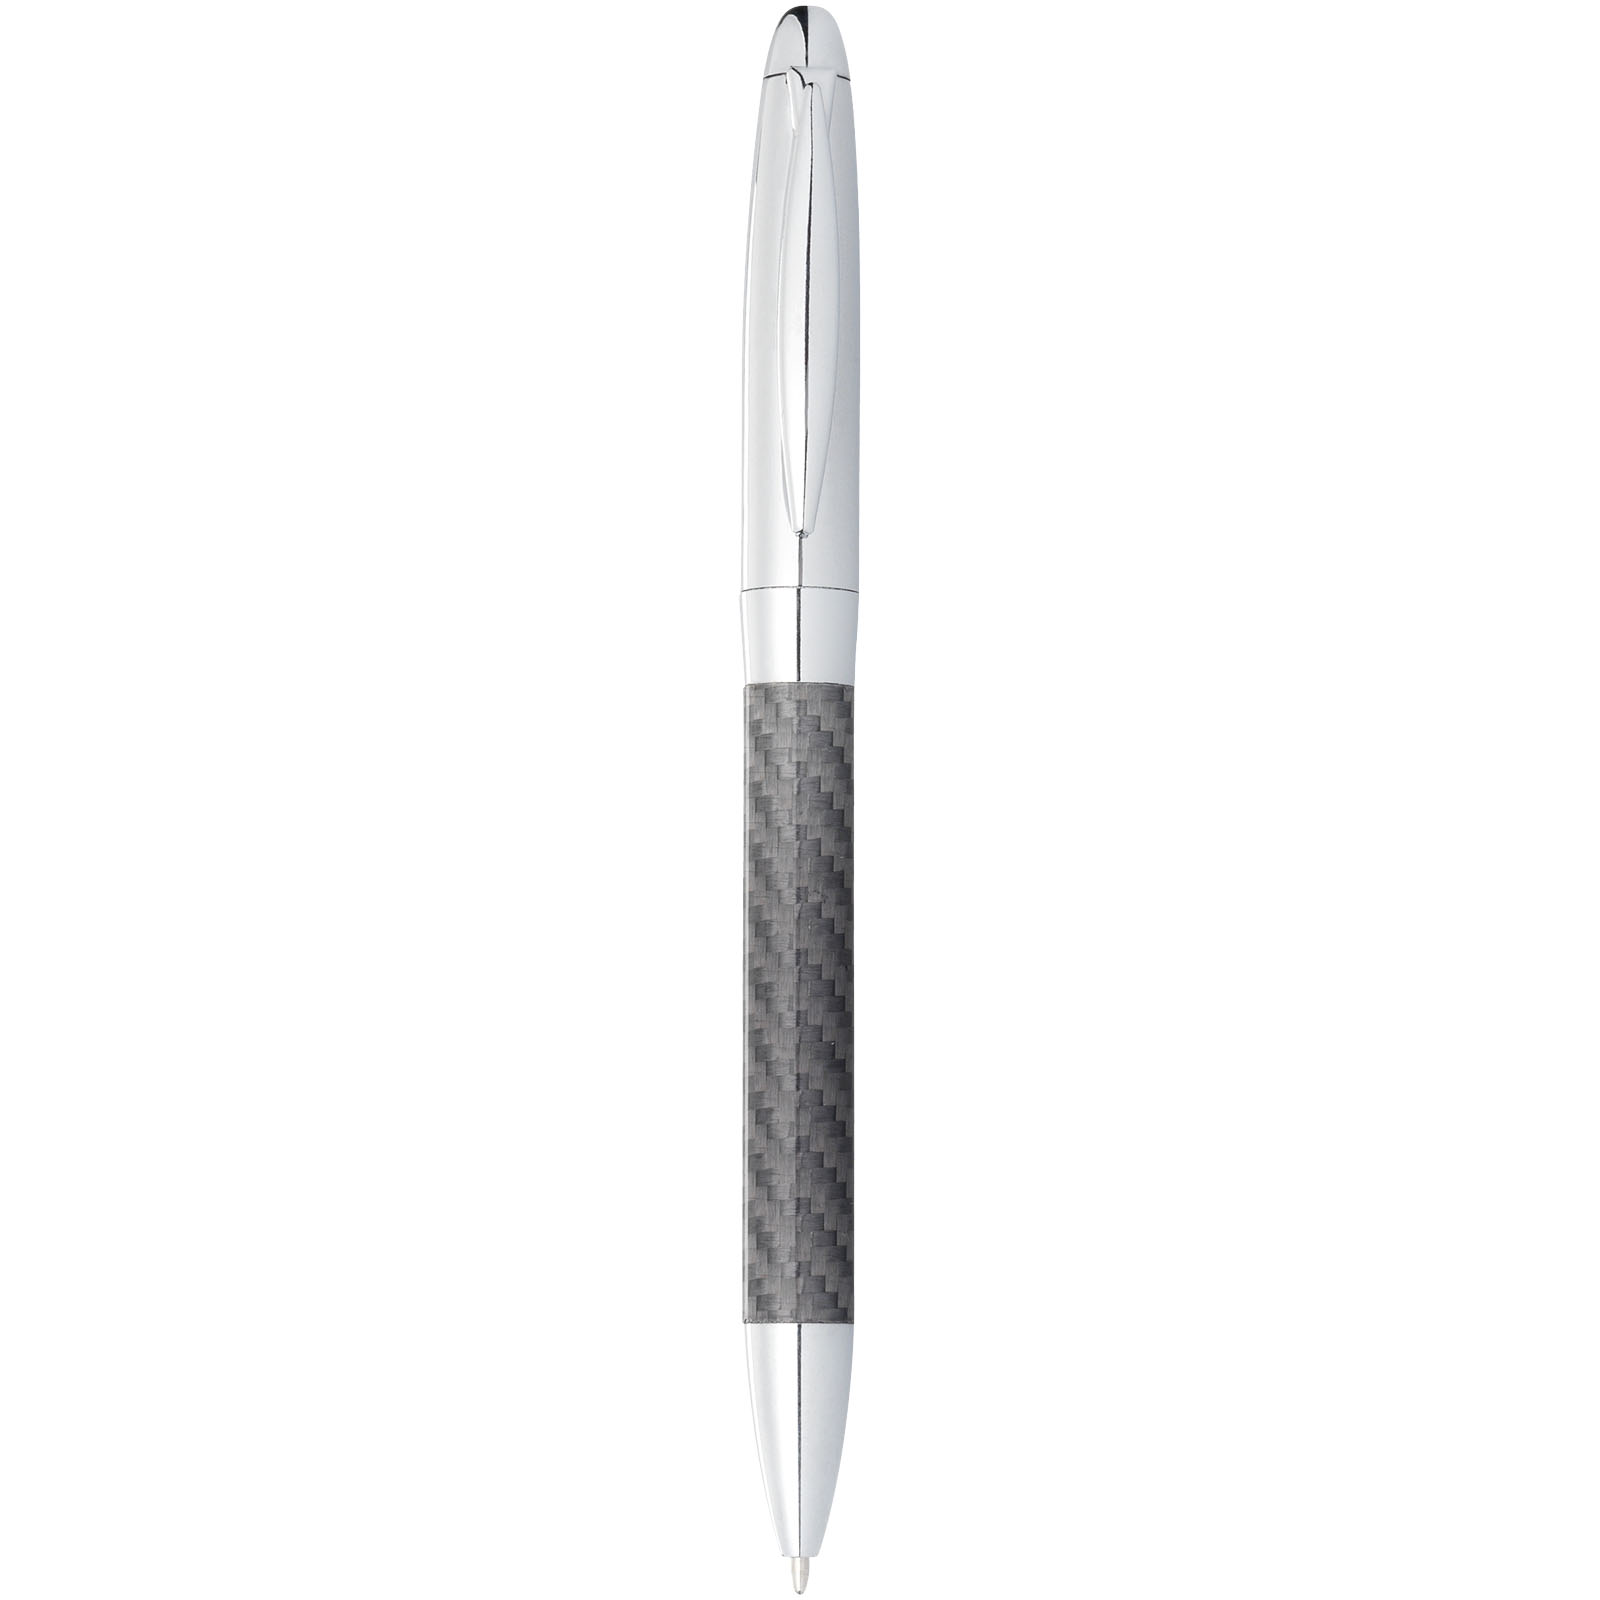 Advertising Ballpoint Pens - Winona ballpoint pen with carbon fibre details - 1